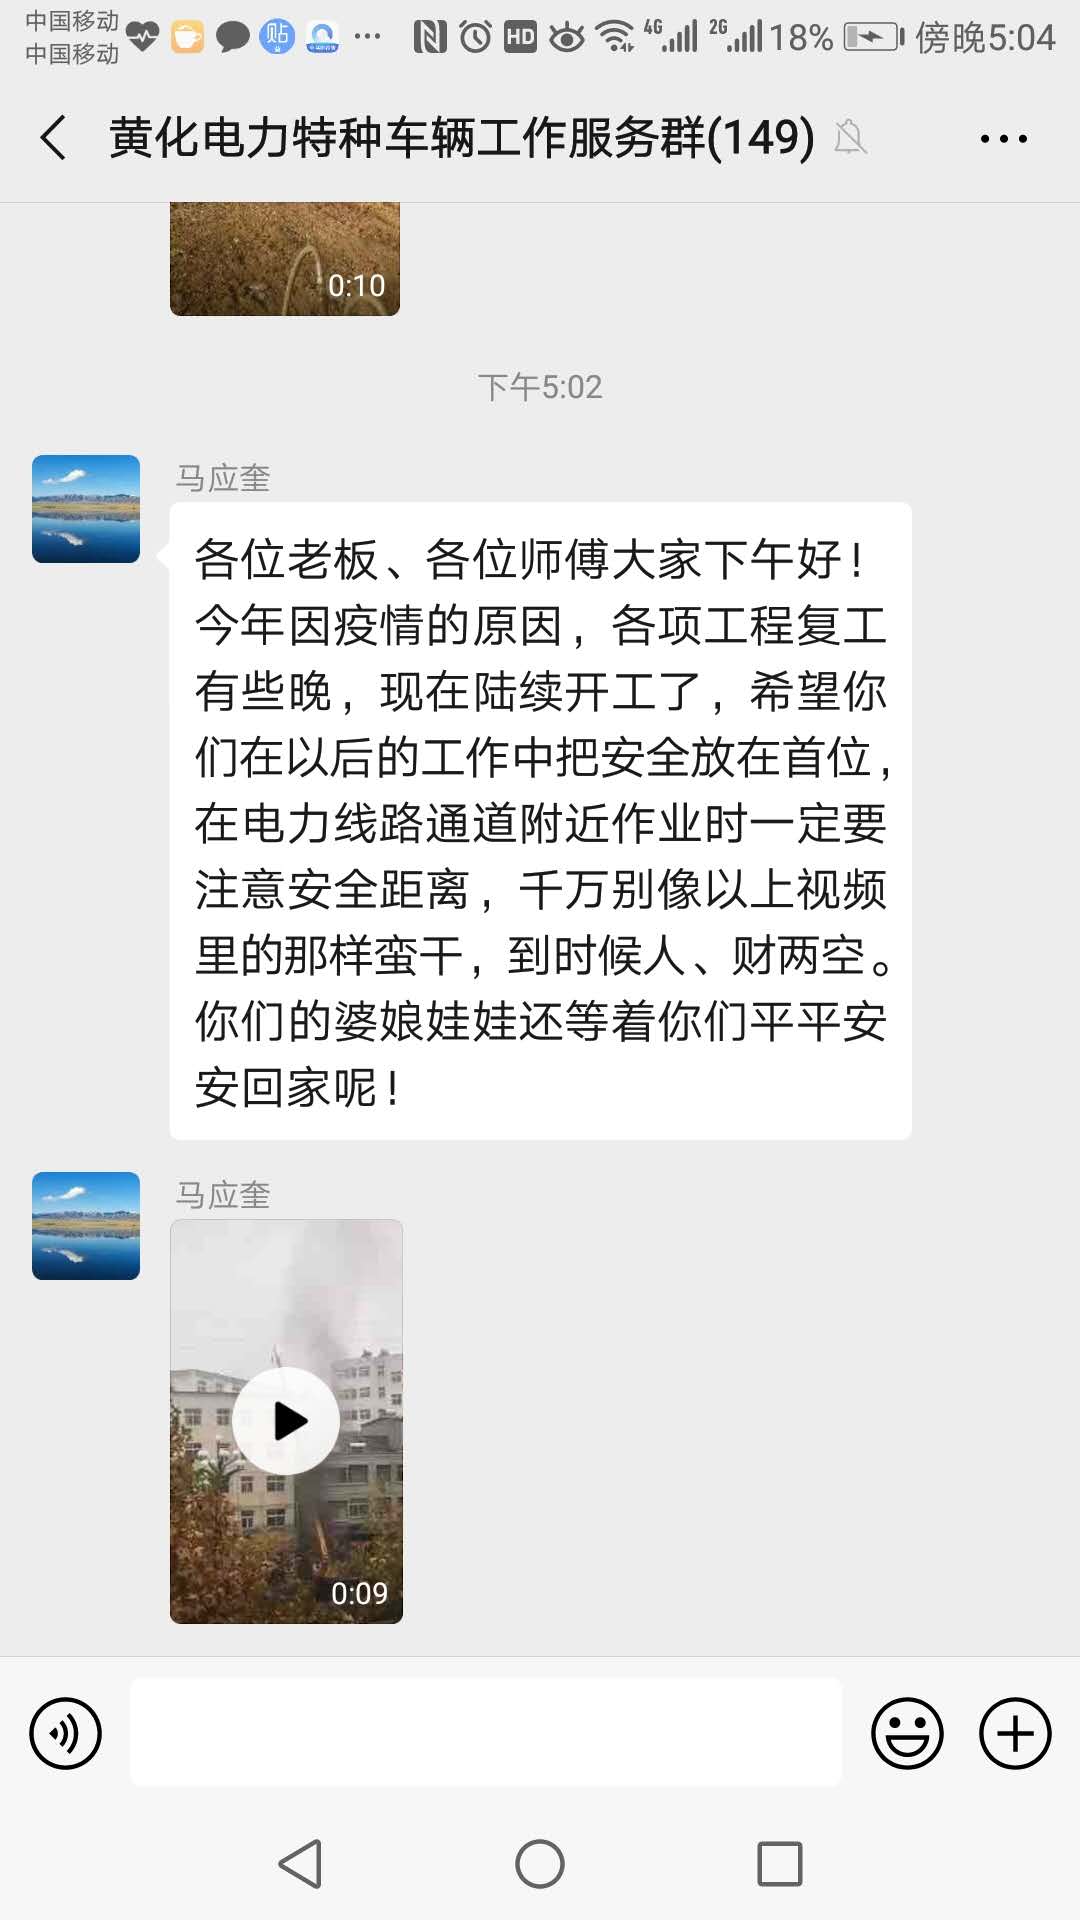 [titlepic] 国网黄化供电公司借助微信群构建电力设施防外破平台